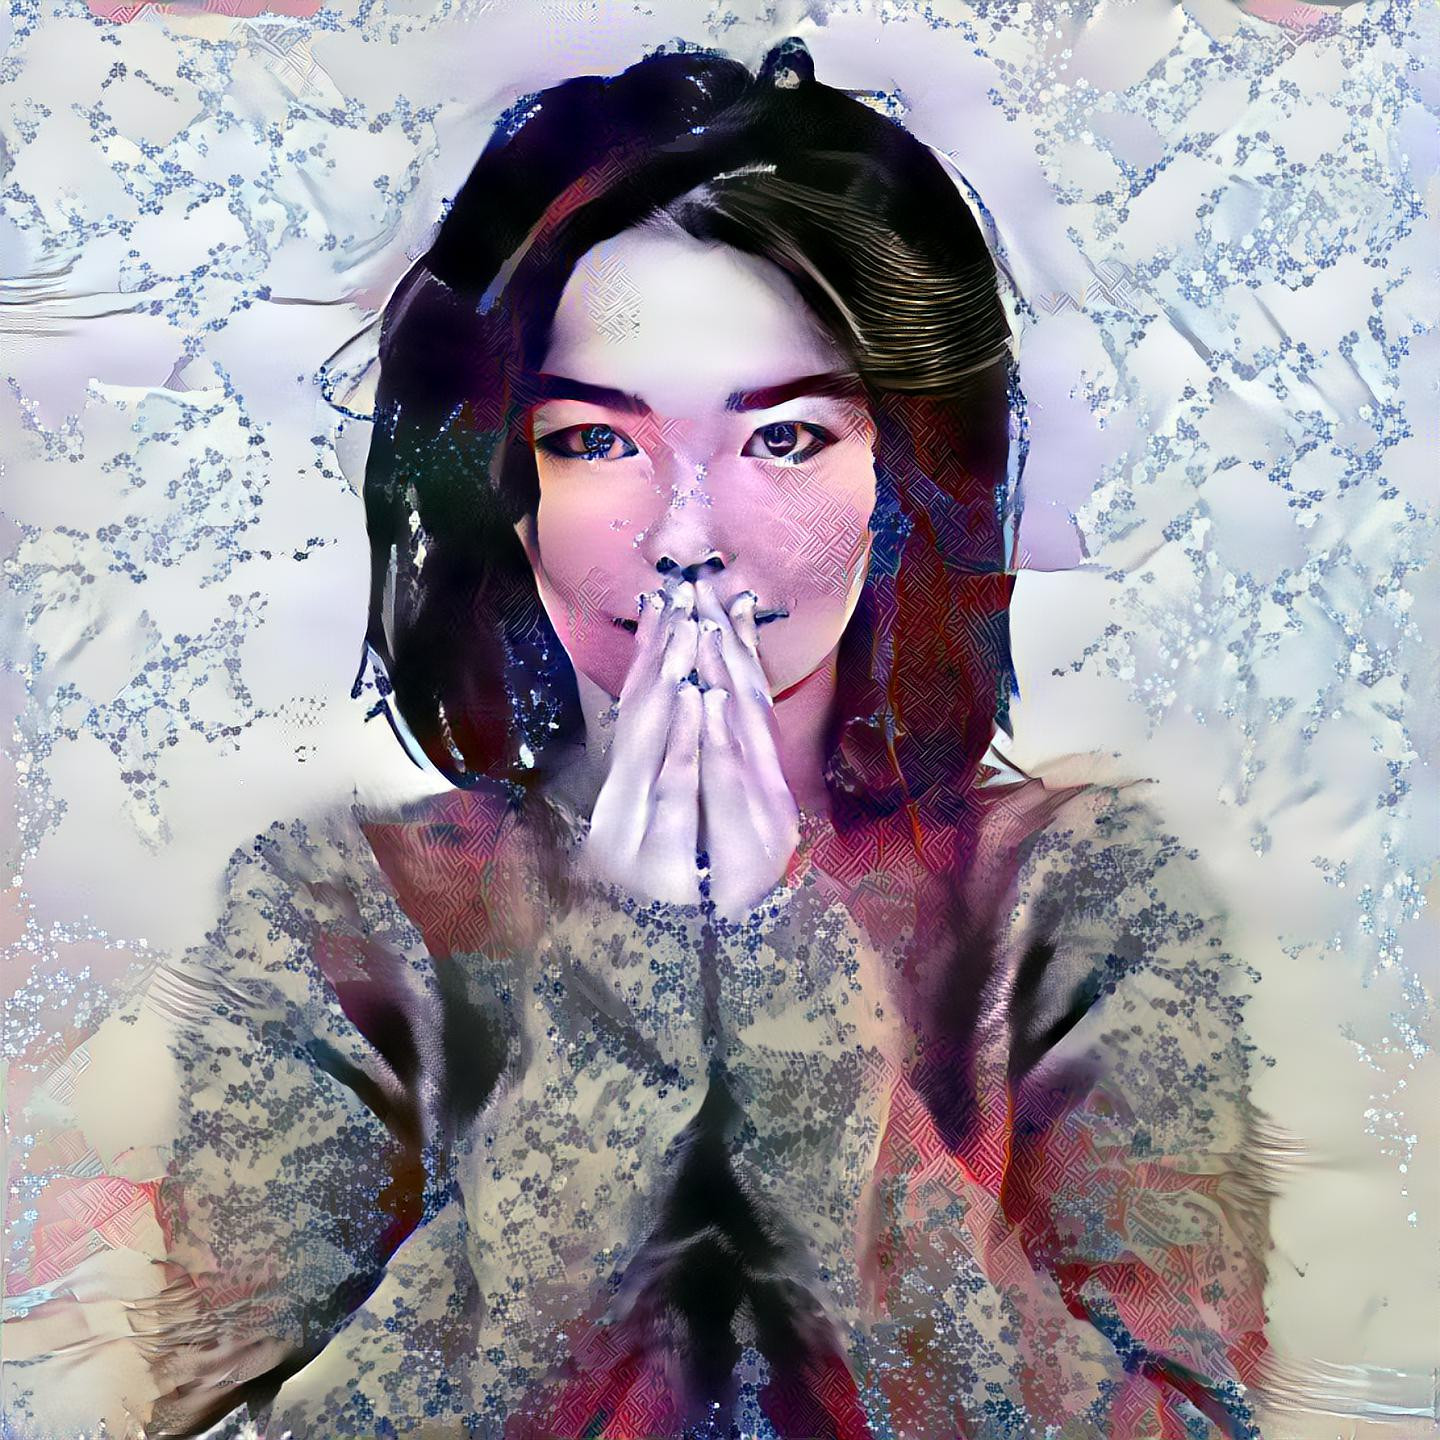 Deep Dream inspired by Björk channeling Homogenic